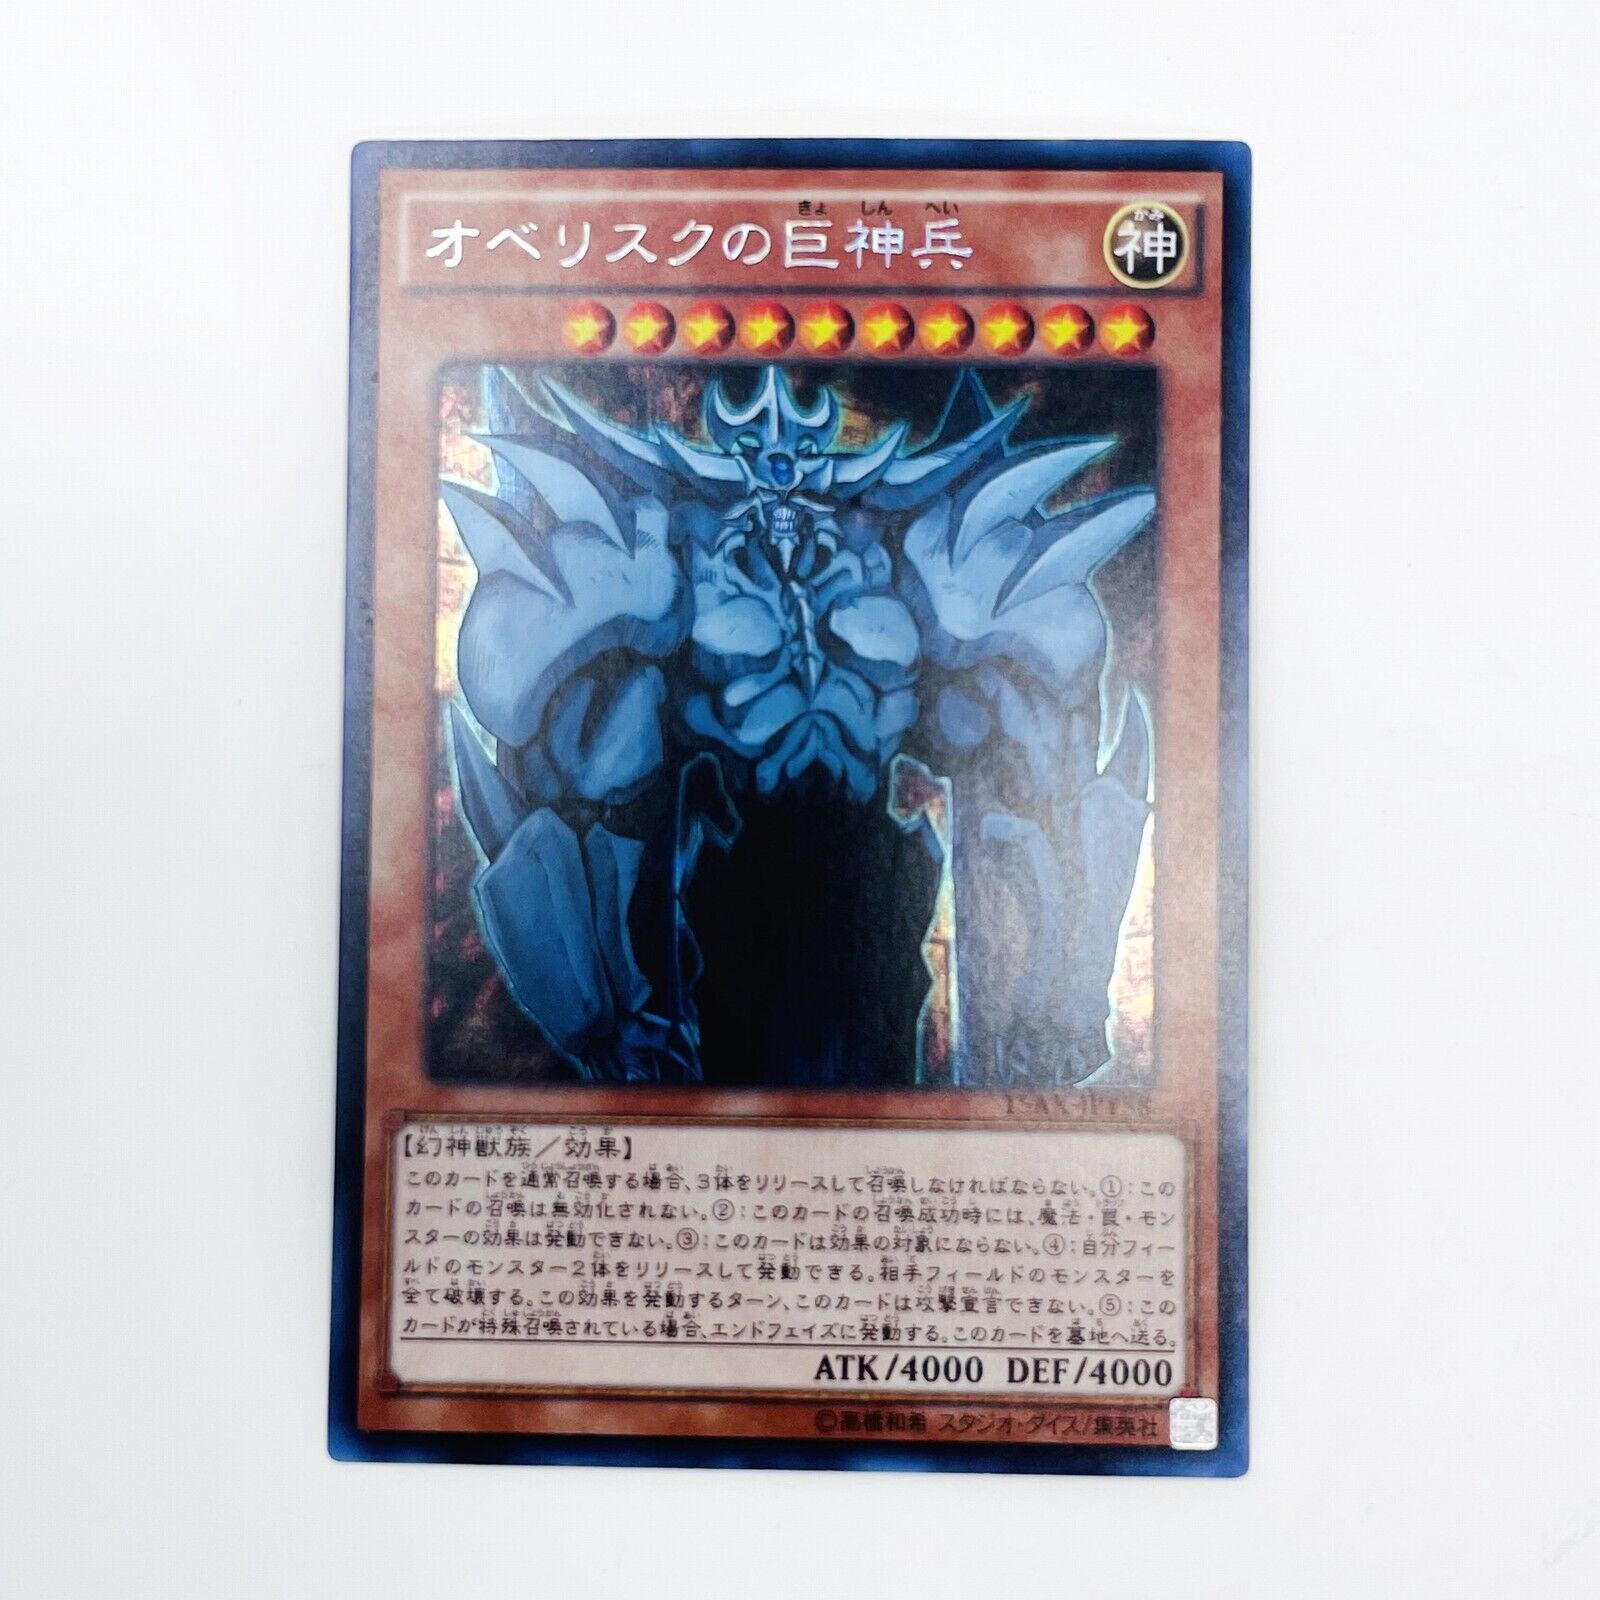 YUGIOH CARD OBELISK THE TORMENTOR MILLENNIUM RARE 15AX-JPY58 JAPANESE